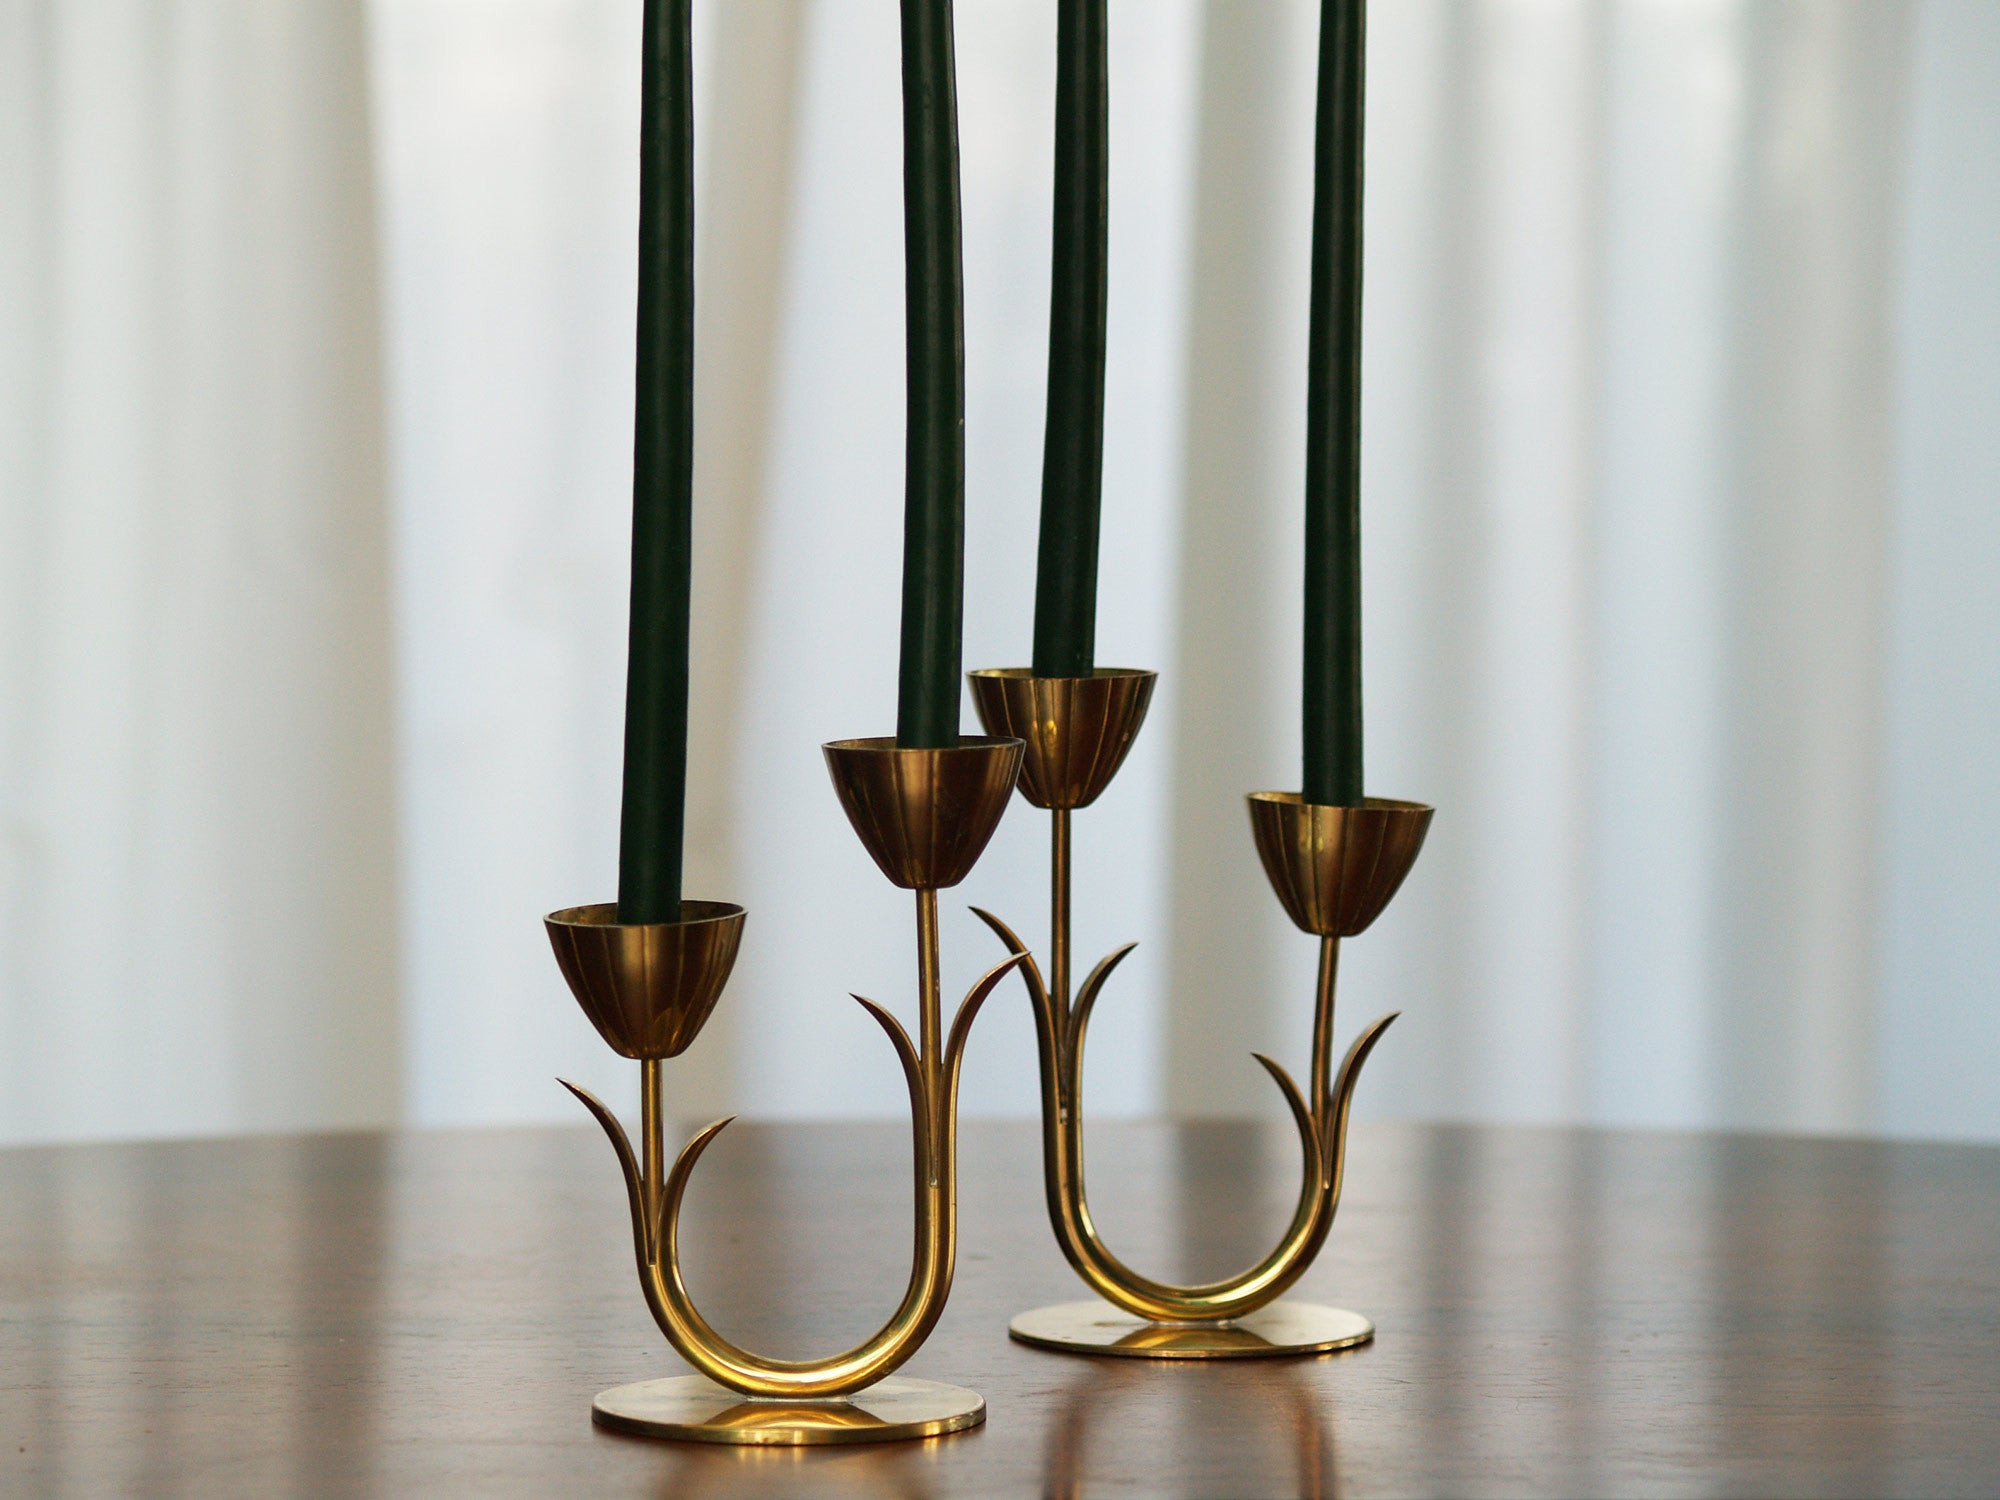 Paire de flambeaux de Gunnar Ander & Ystad Metall, Suède (années 1940)..Pair of candle holders by Gunnar Ander & Ystad Metall, Sweden (Circa 1940)